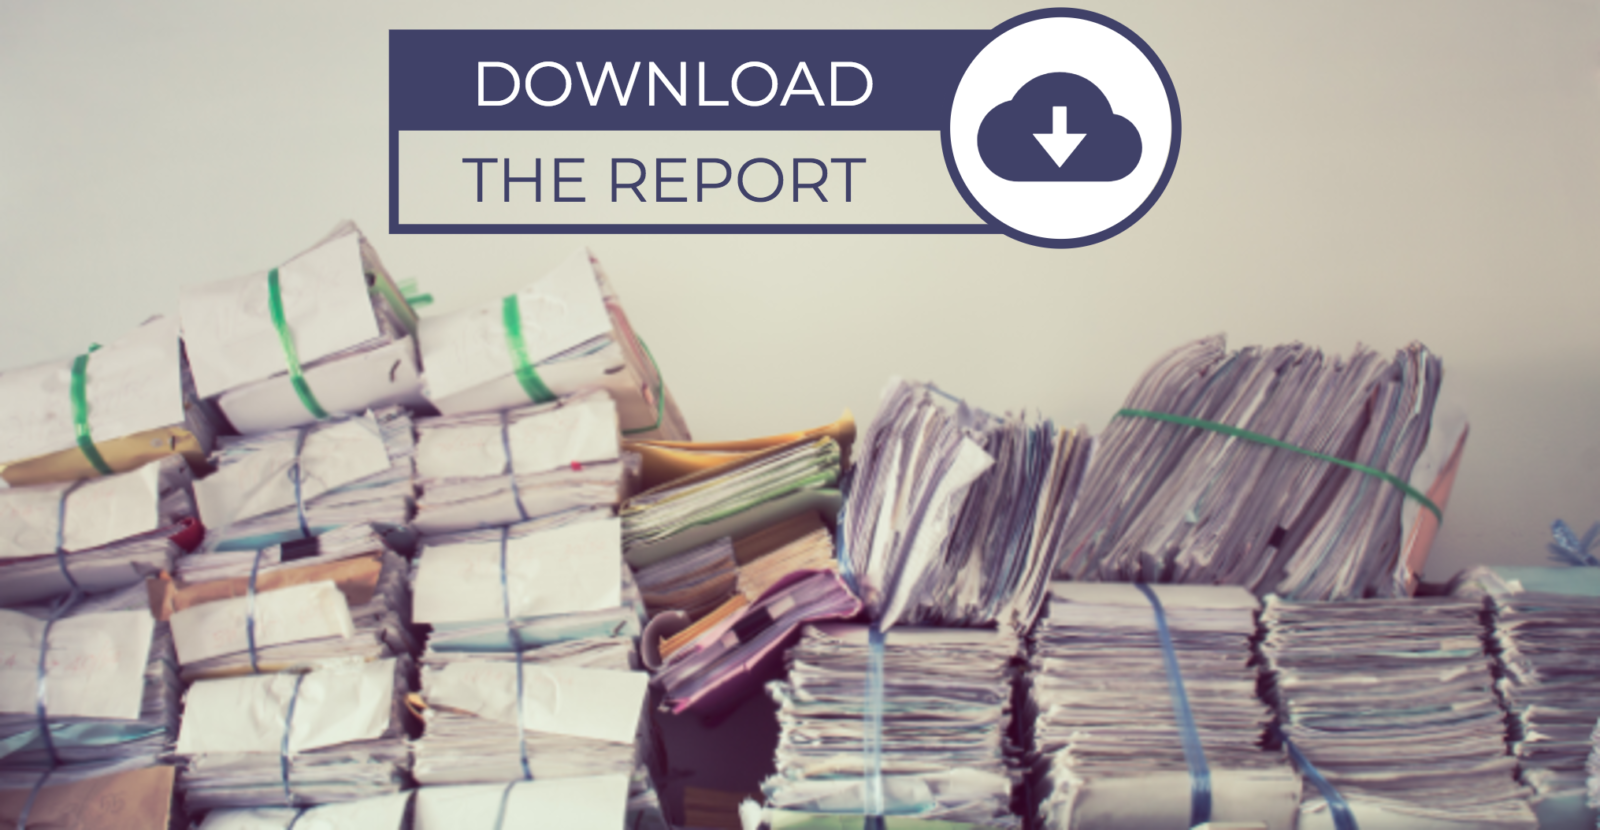 Download the Report CTA